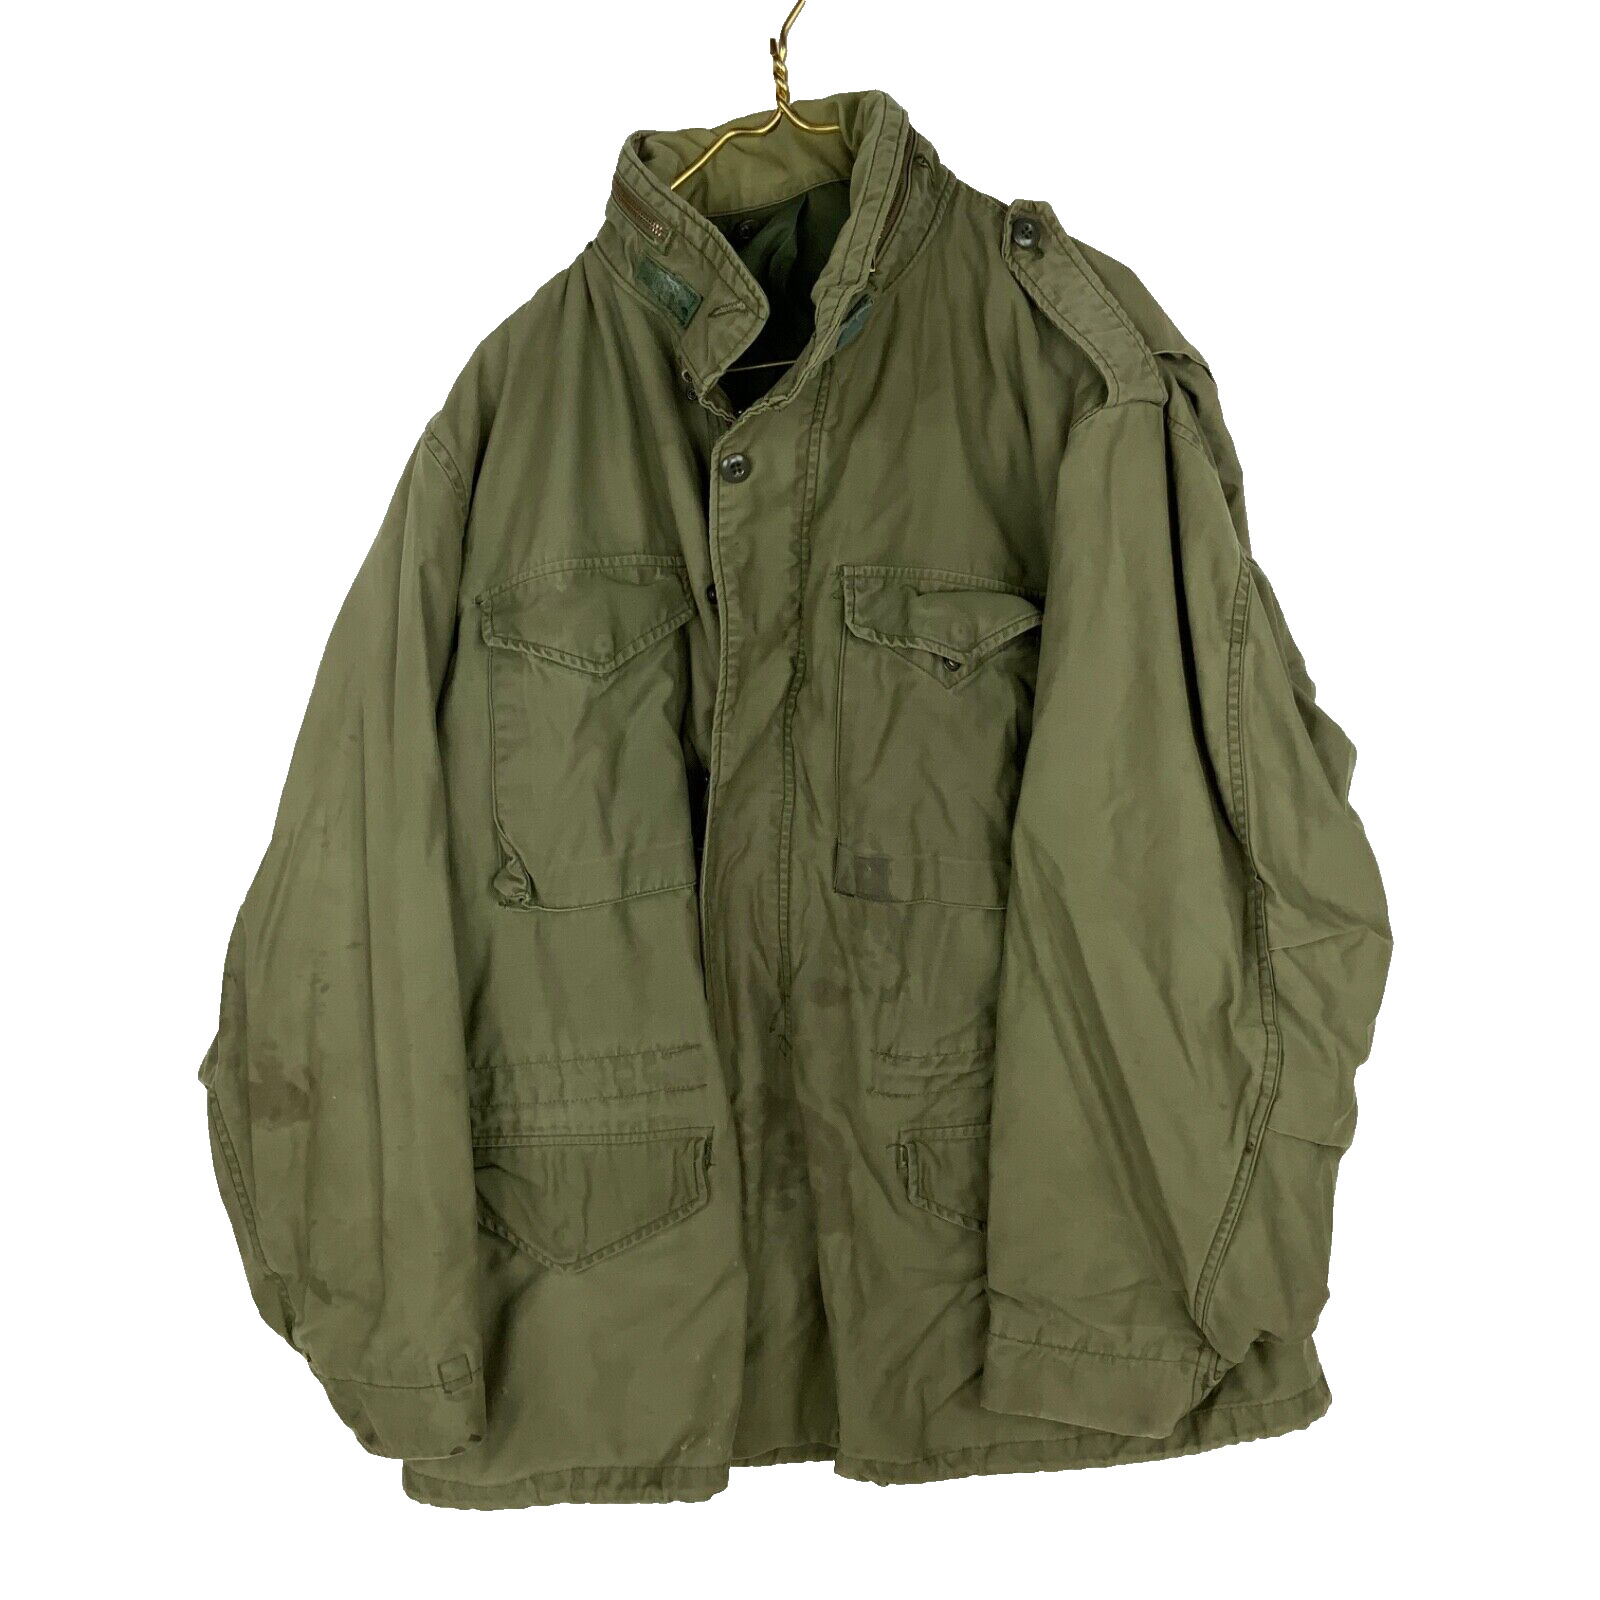 Vintage Us Military Cold Weather Jacket Size 2XL Green Vietnam Era 60s 70s